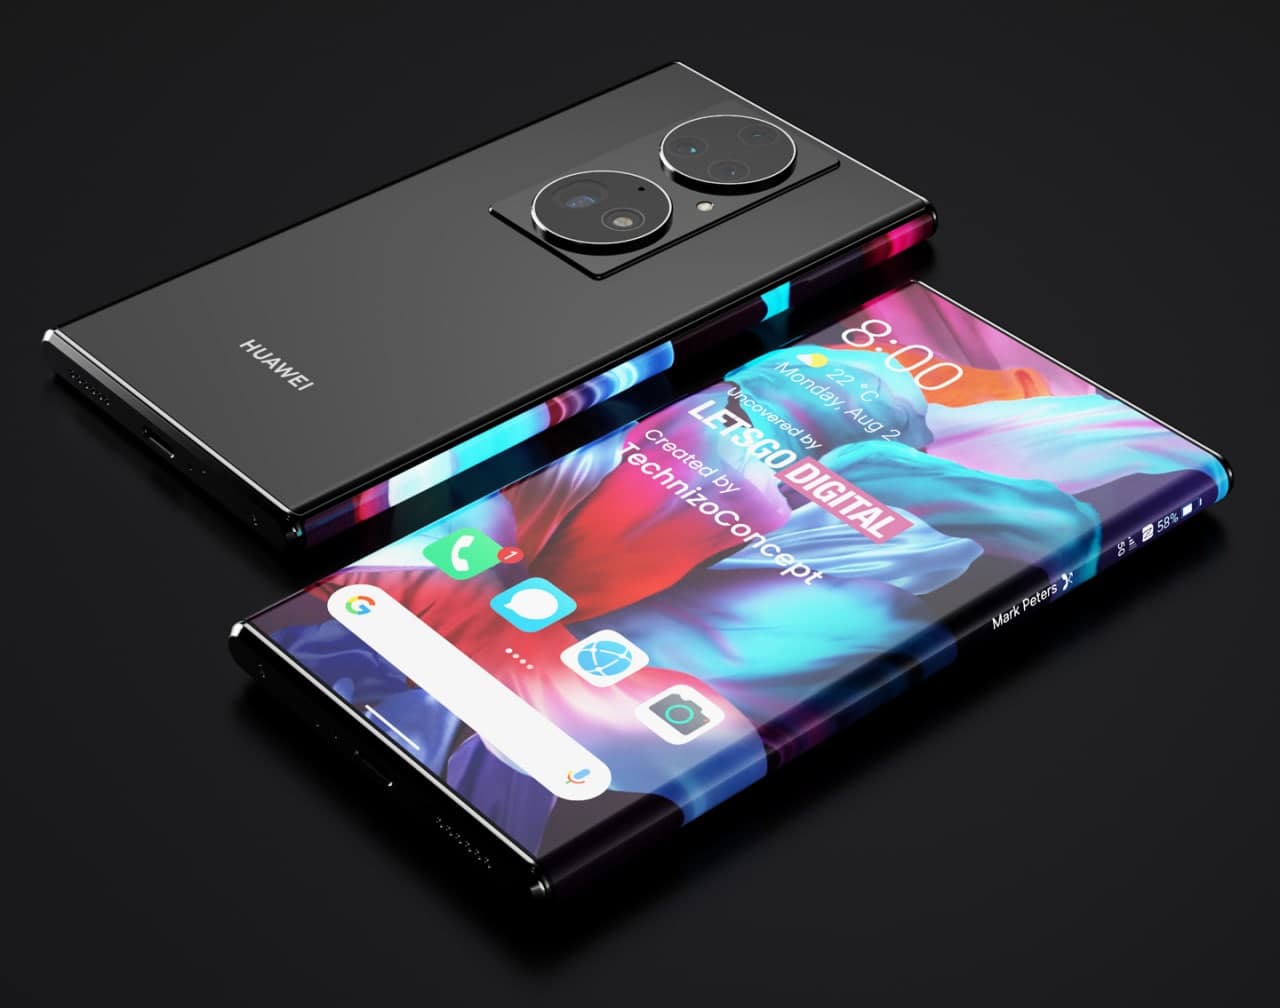 Huawei Super curved display phone